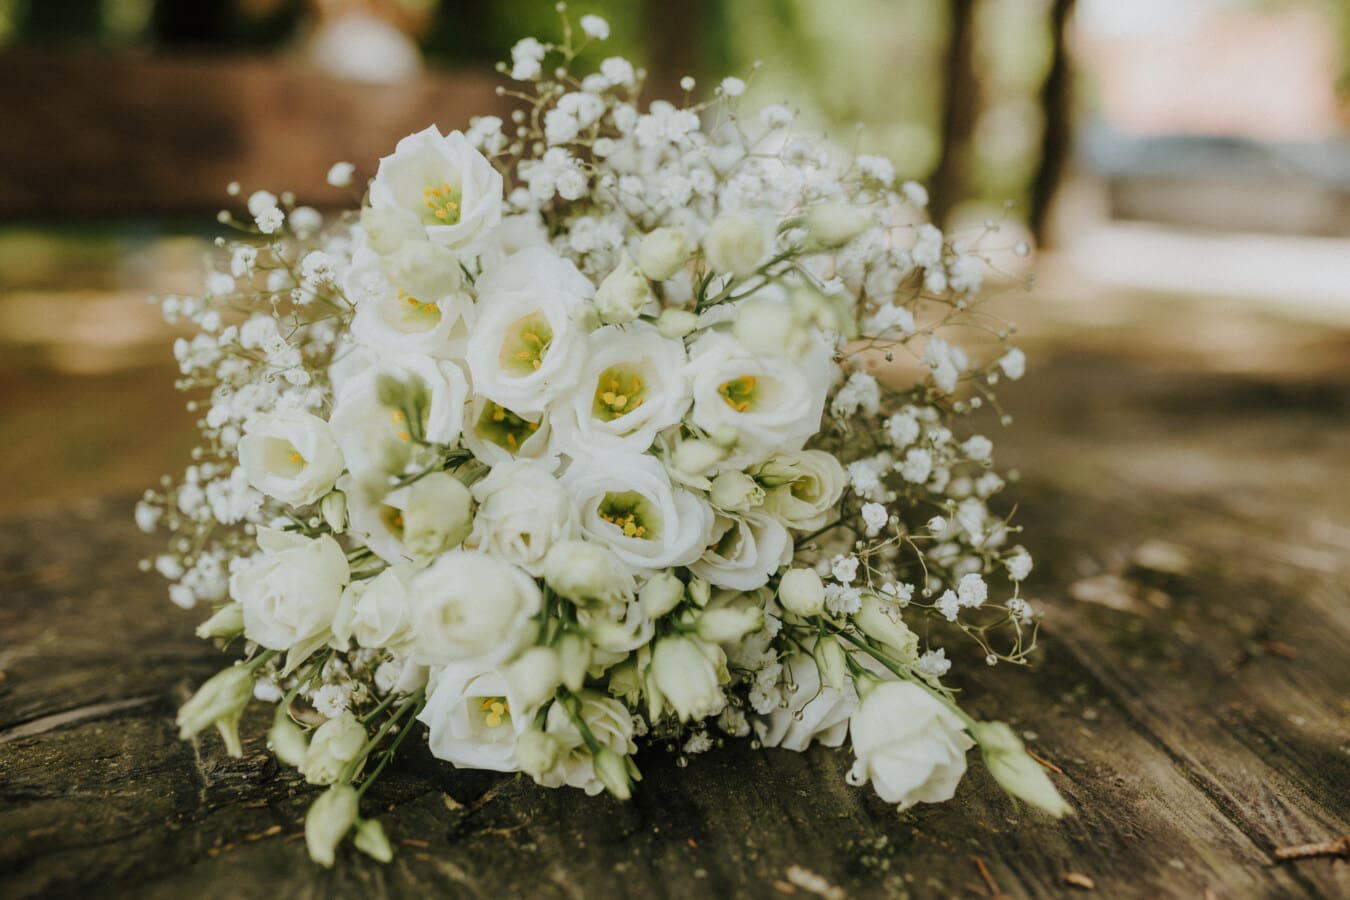 Imagen gratis: ramo de la, hermosa, flor blanca, rosas, romántica,  naturaleza muerta, elegancia, lujoso, flor, boda